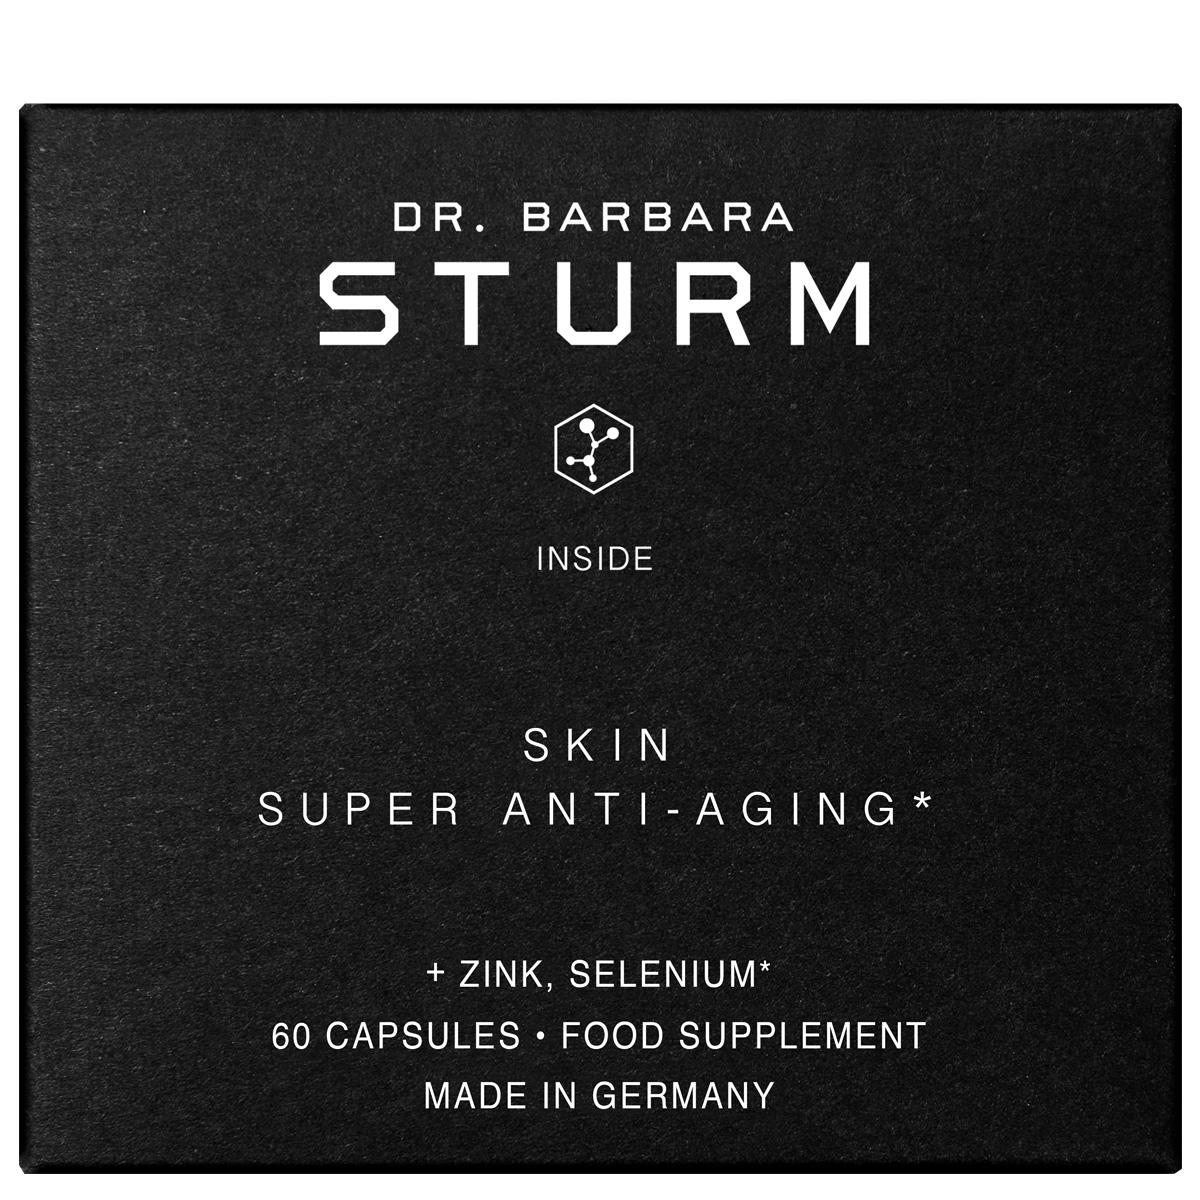 Dr. Barbara Sturm Skin Super Anti-Aging* 60 Capsules 60 Stück pro Packung - 3